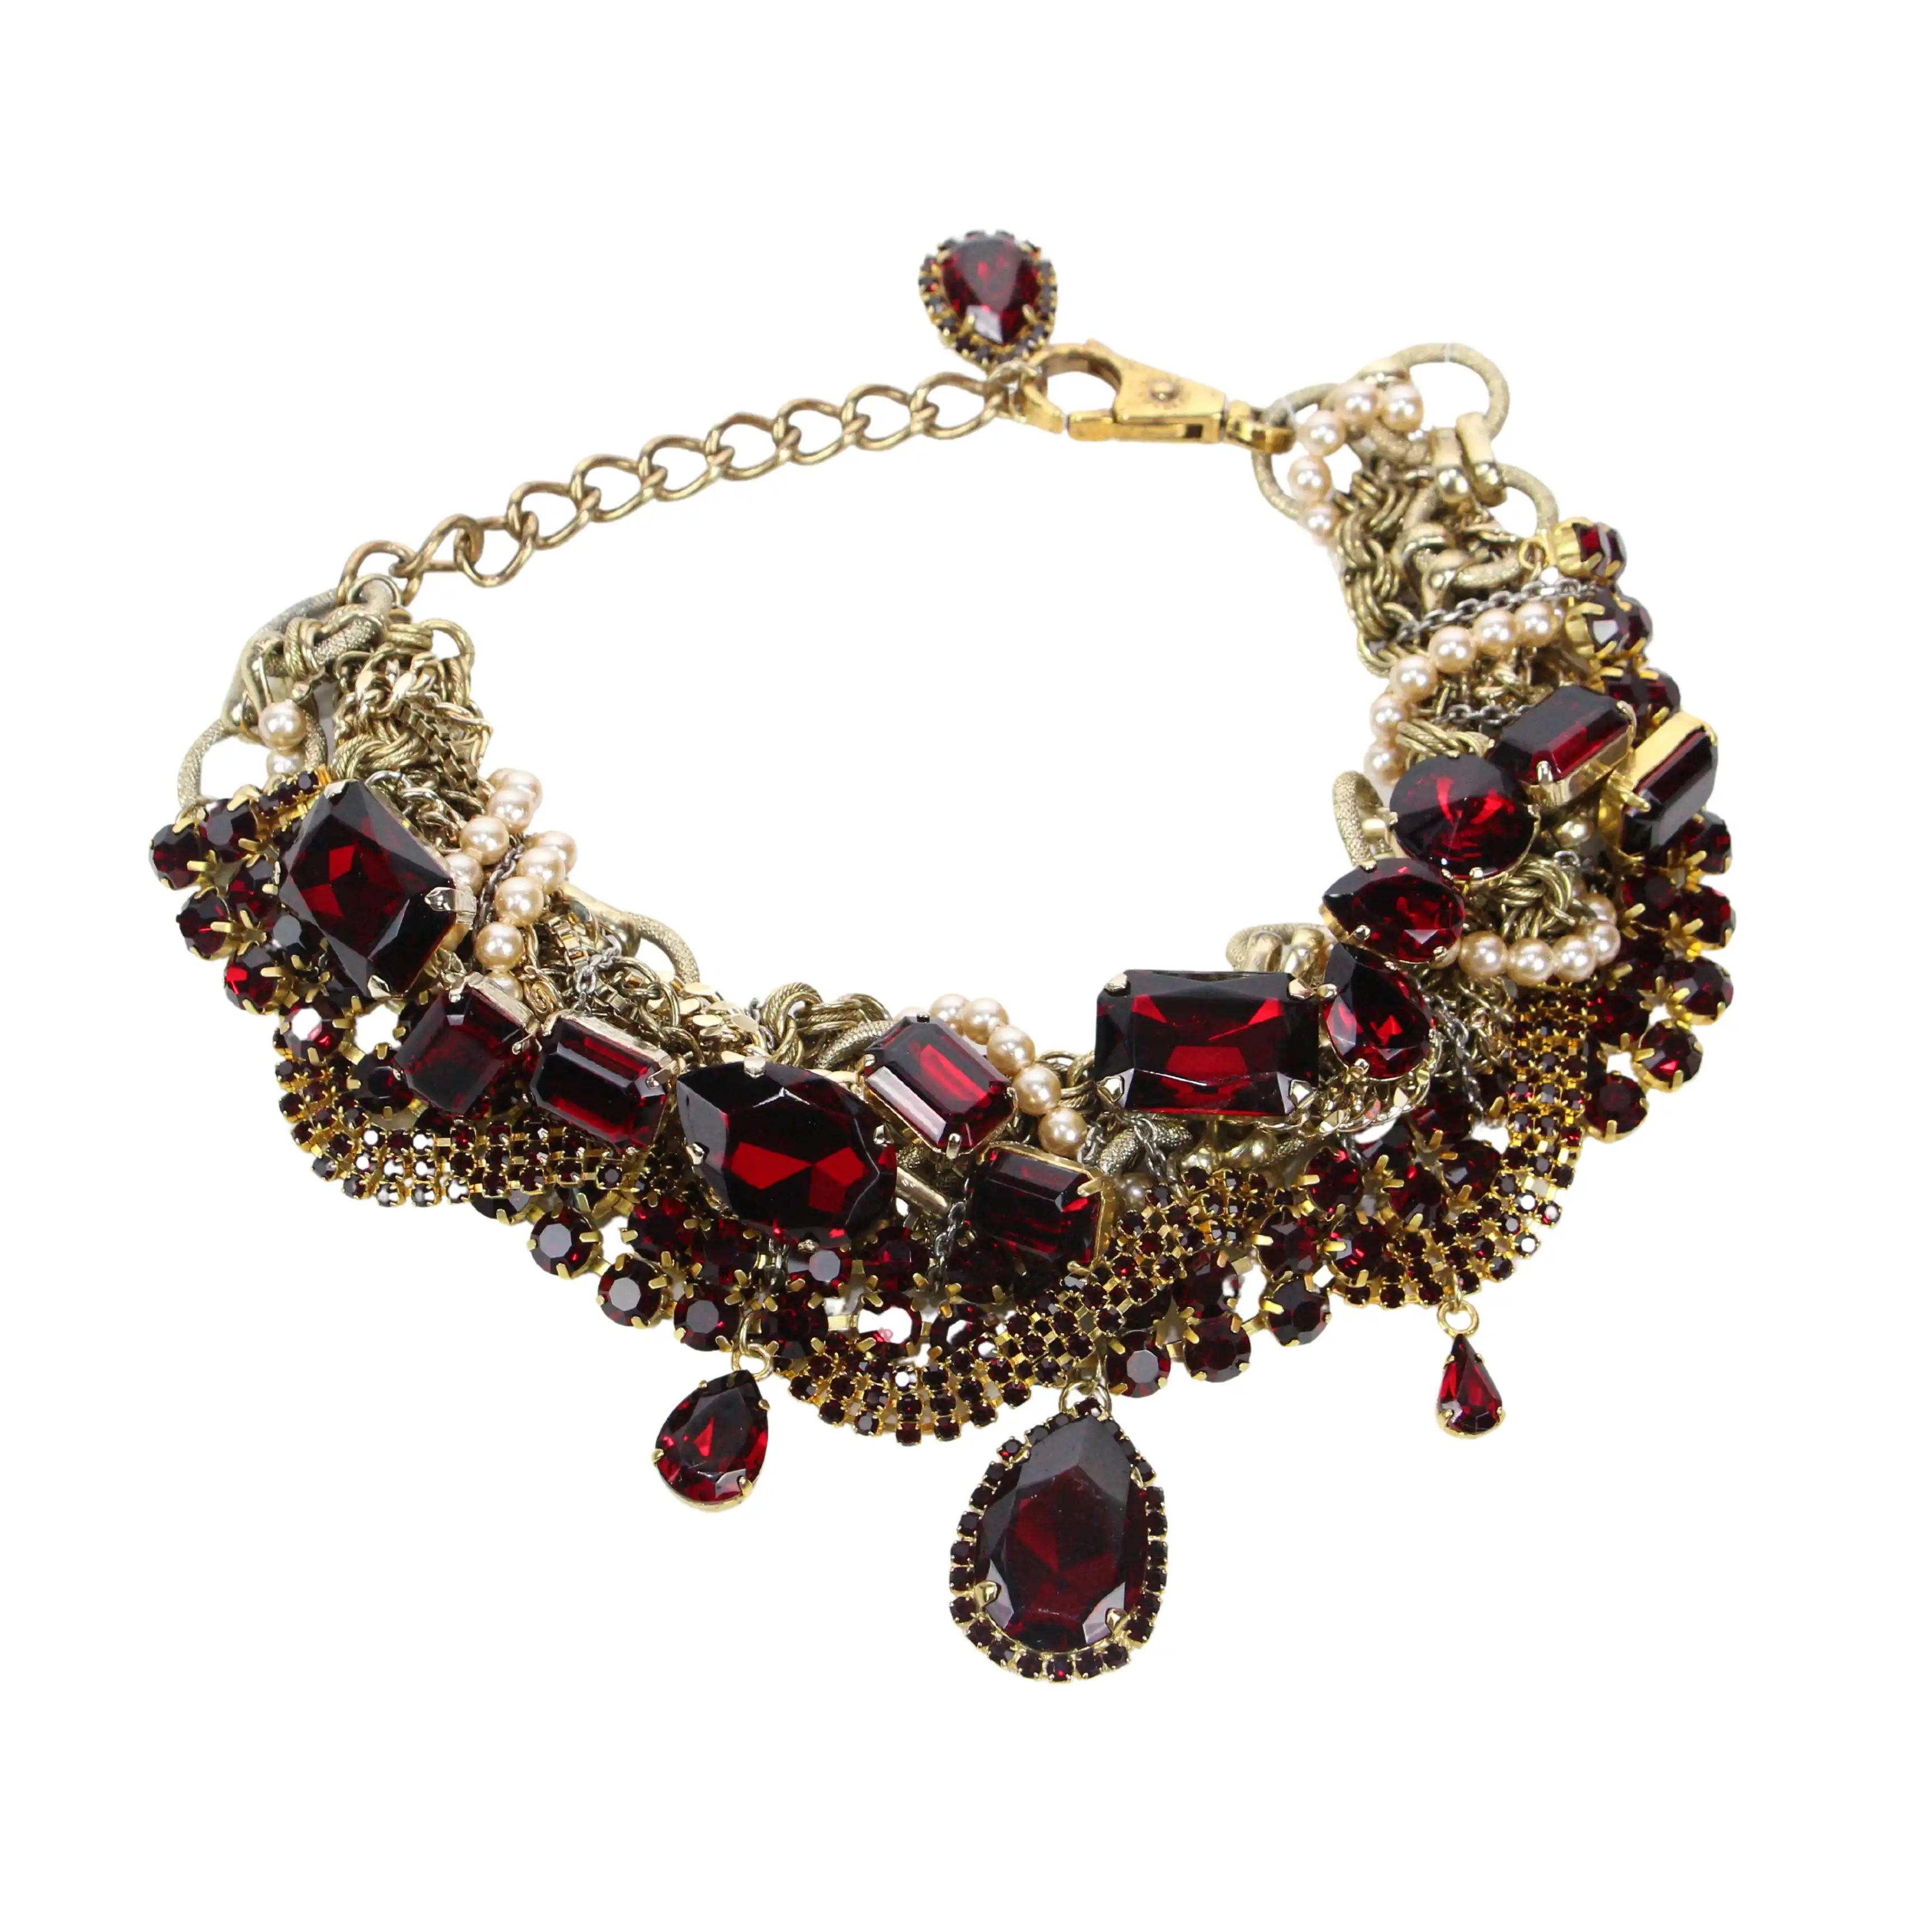 Necklace by Dolce & Gabbana